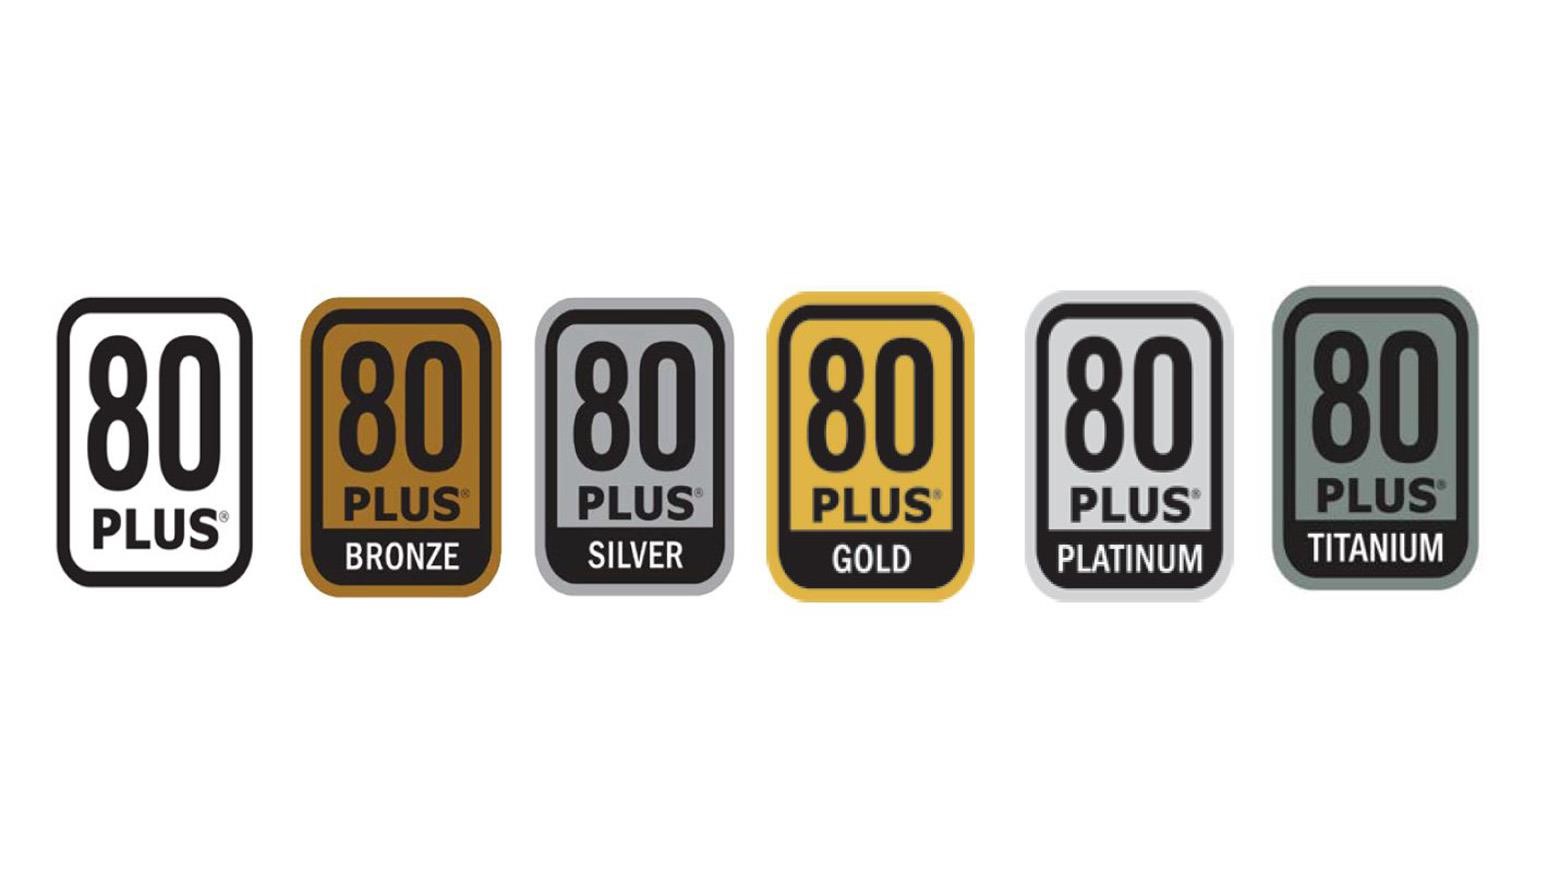 80 plus platinum. Сертификация блоков питания 80 Plus. Стандарты блоков питания 80 Plus. Сертификат блока питания 80 Plus. Bronze Gold Silver блок питания.